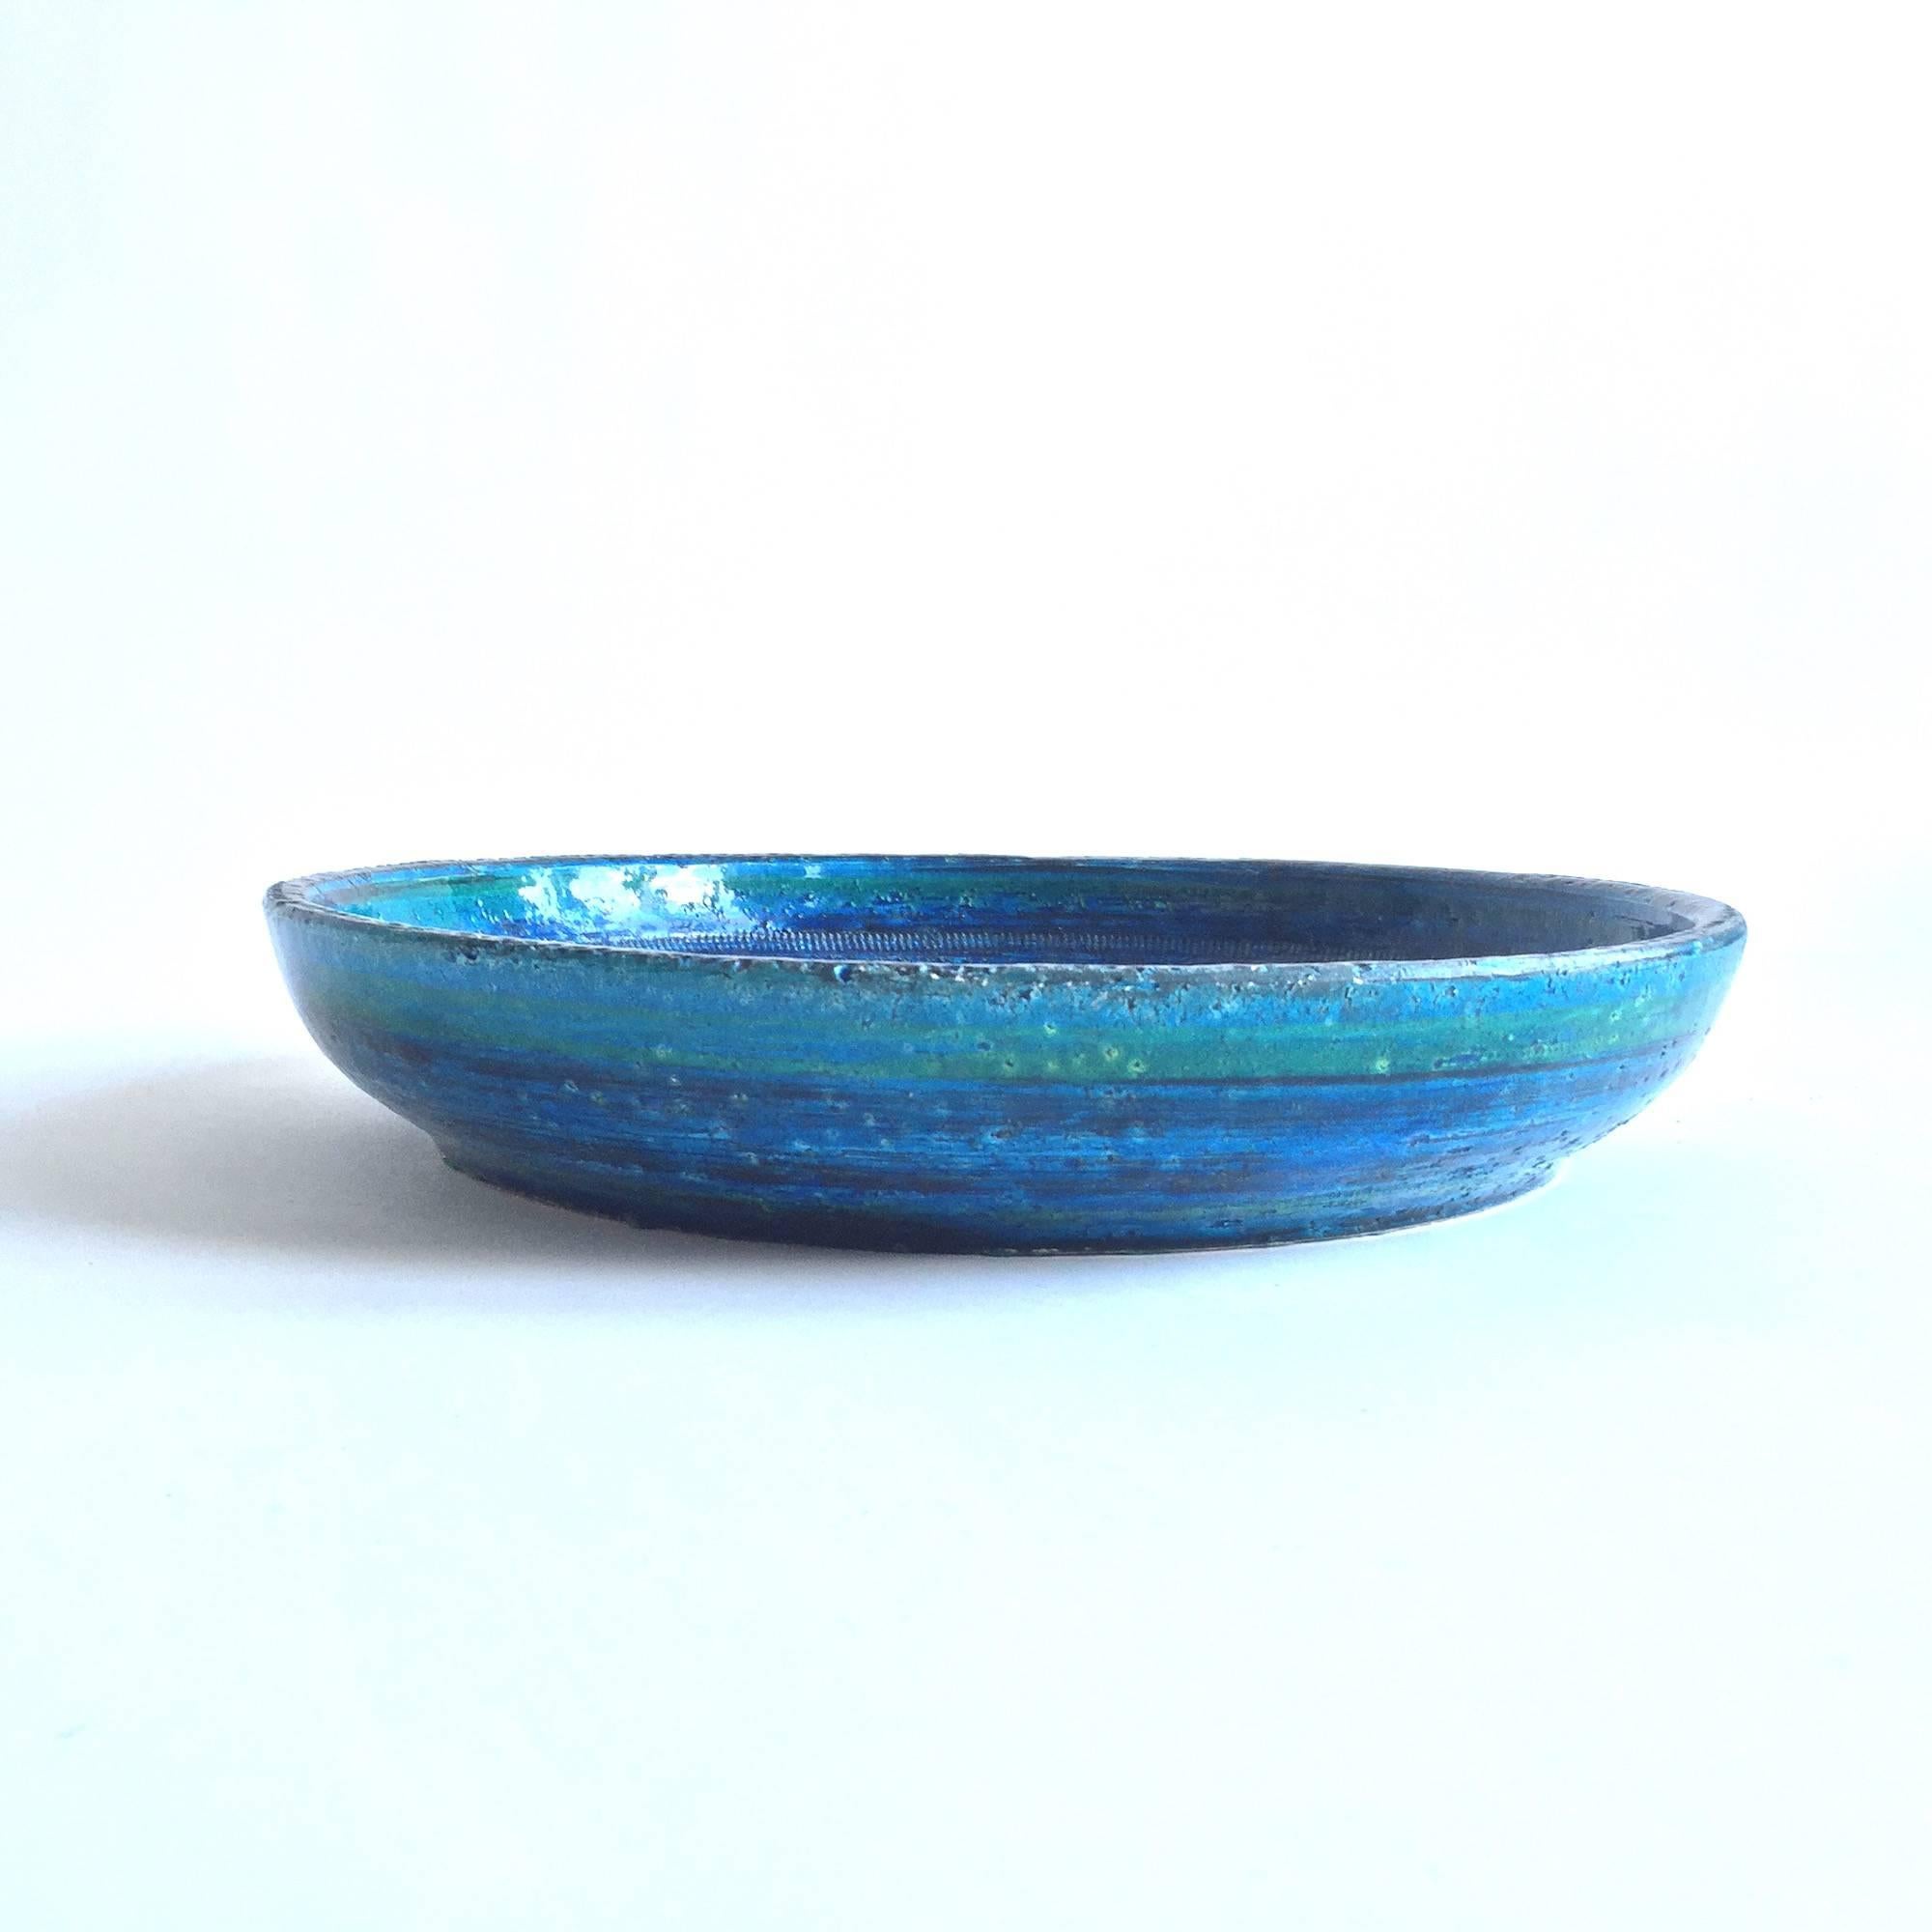 A large Remini blue enameled terracota bowl by Aldo Londi for Bitossi.
Distributed by Illums Bolighus Copenhagen, Denmark.

Located in Hamburg.